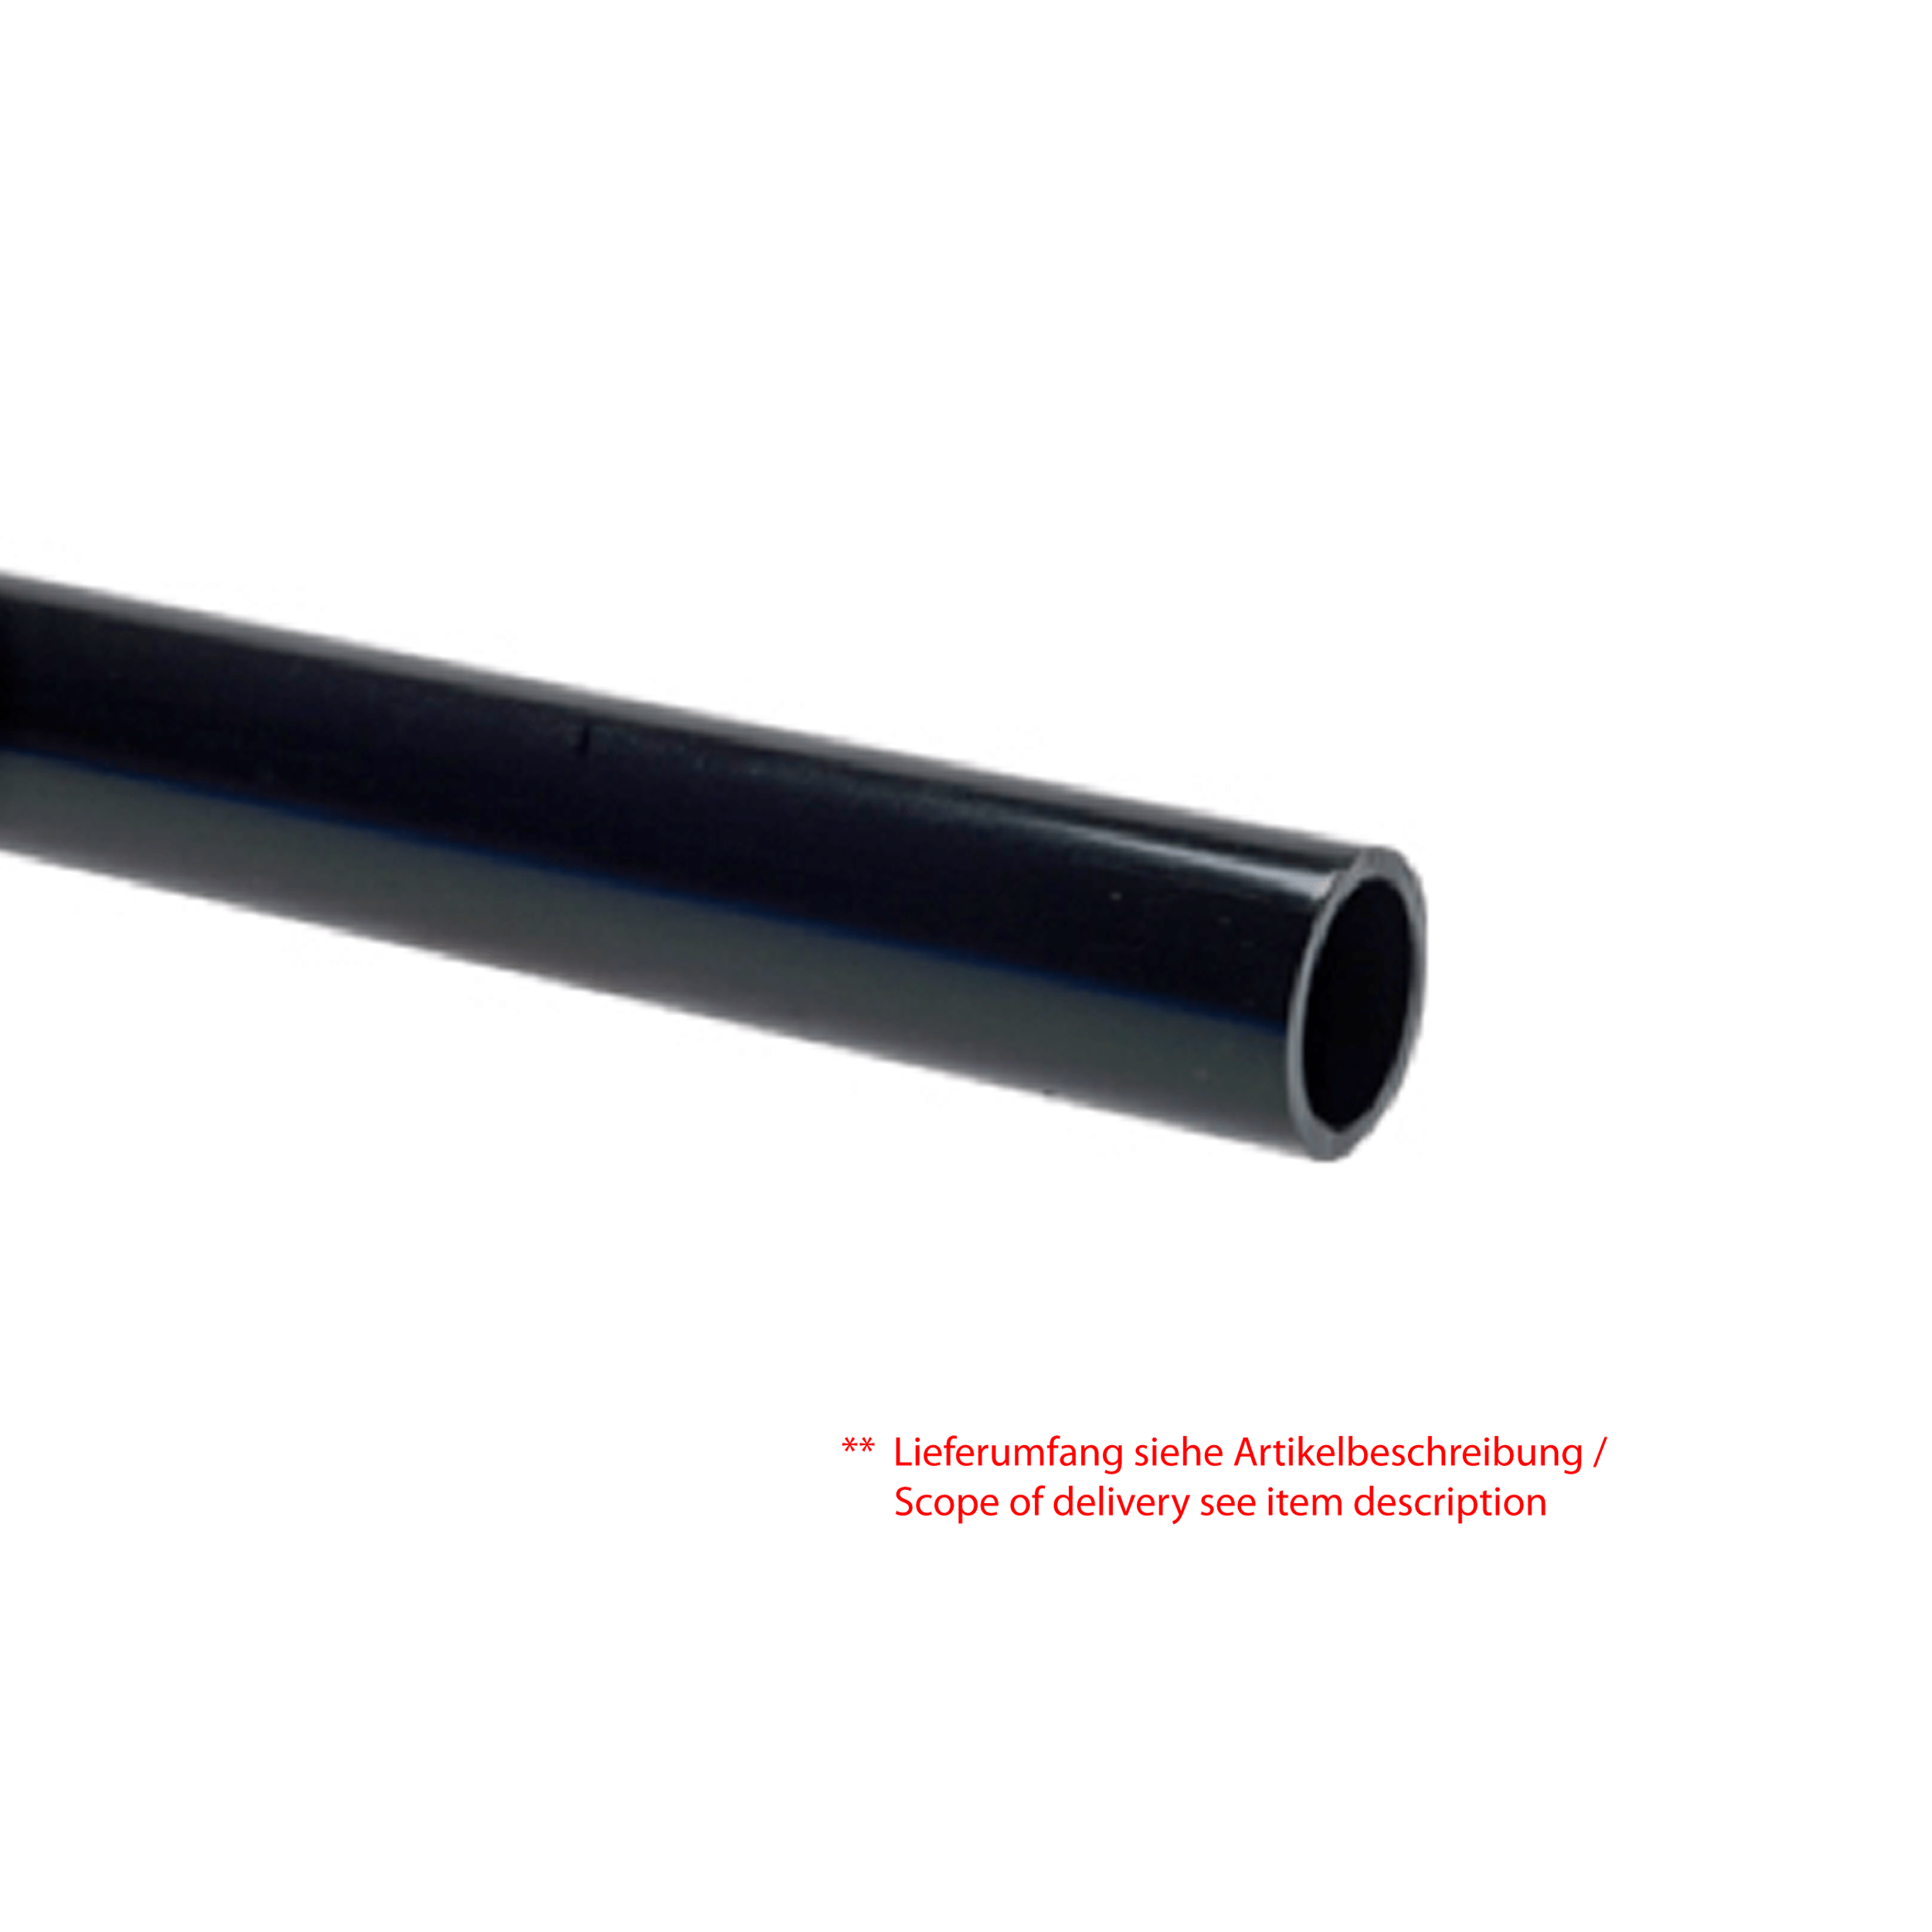 Short Target Round Pole (0,5 m long, 32mm diameter)